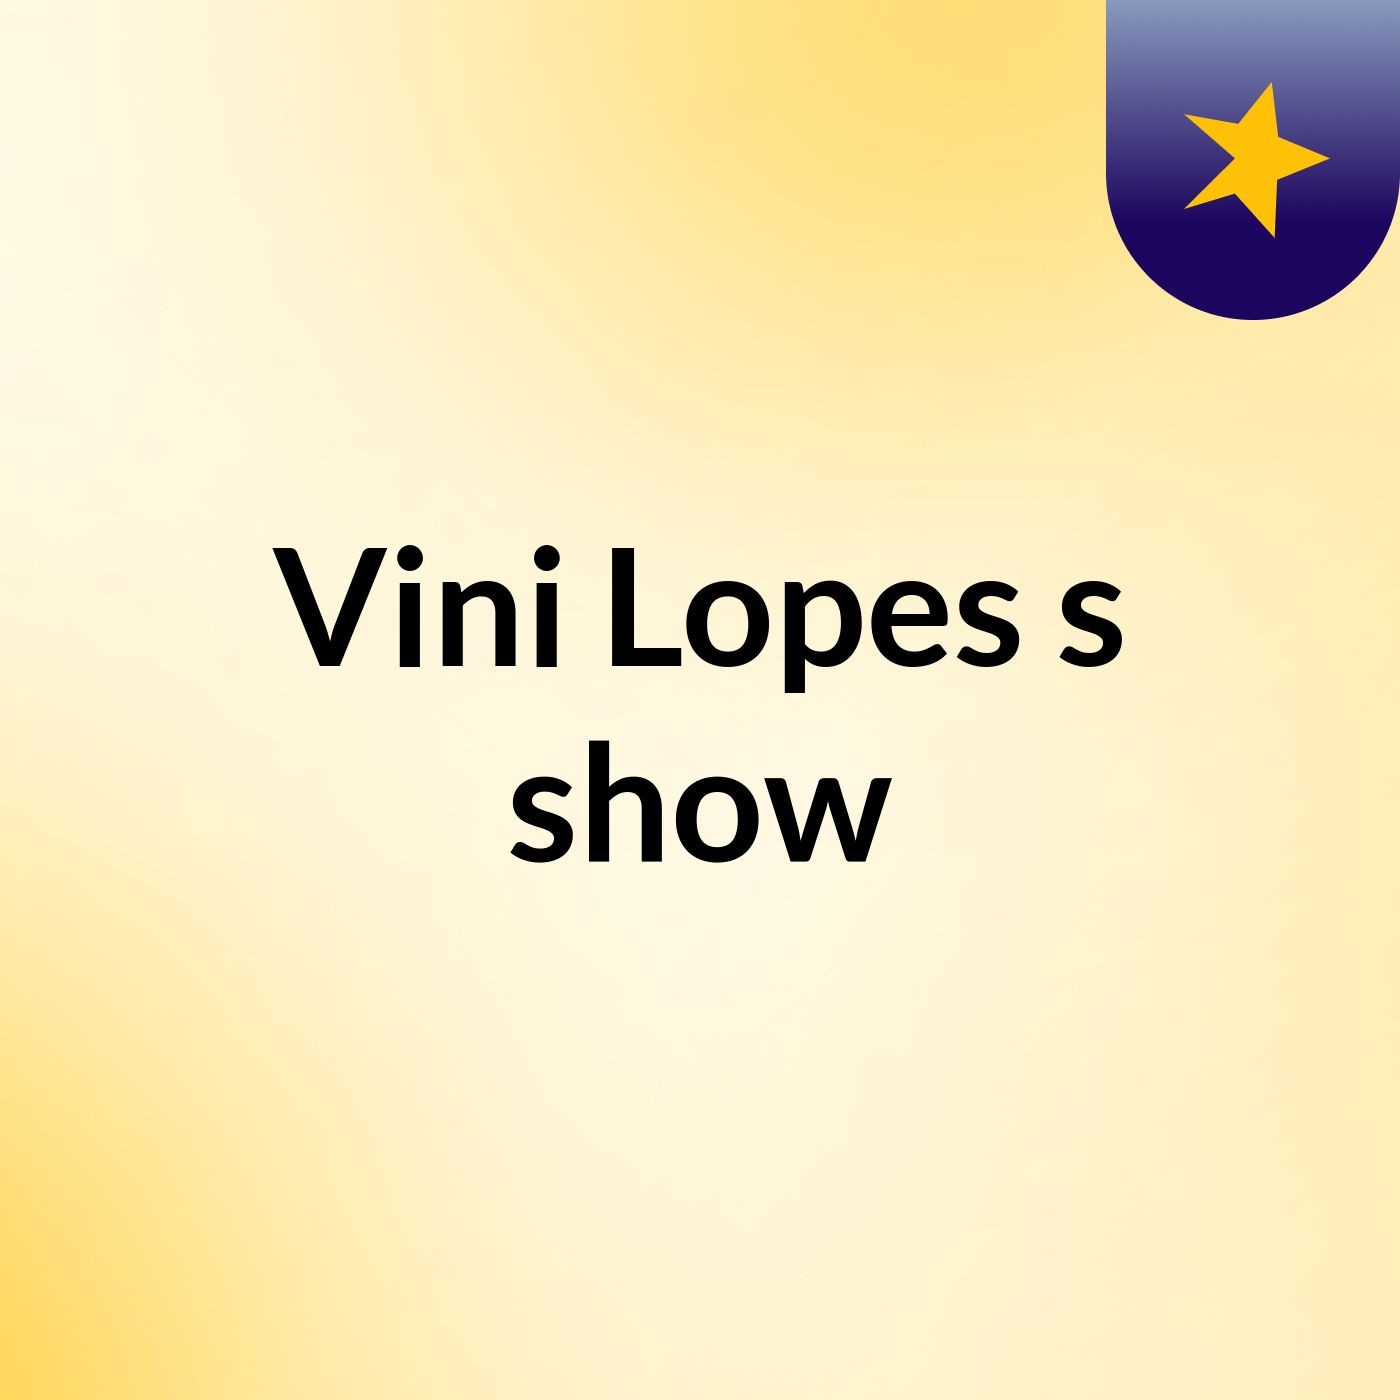 Vini Lopes's show